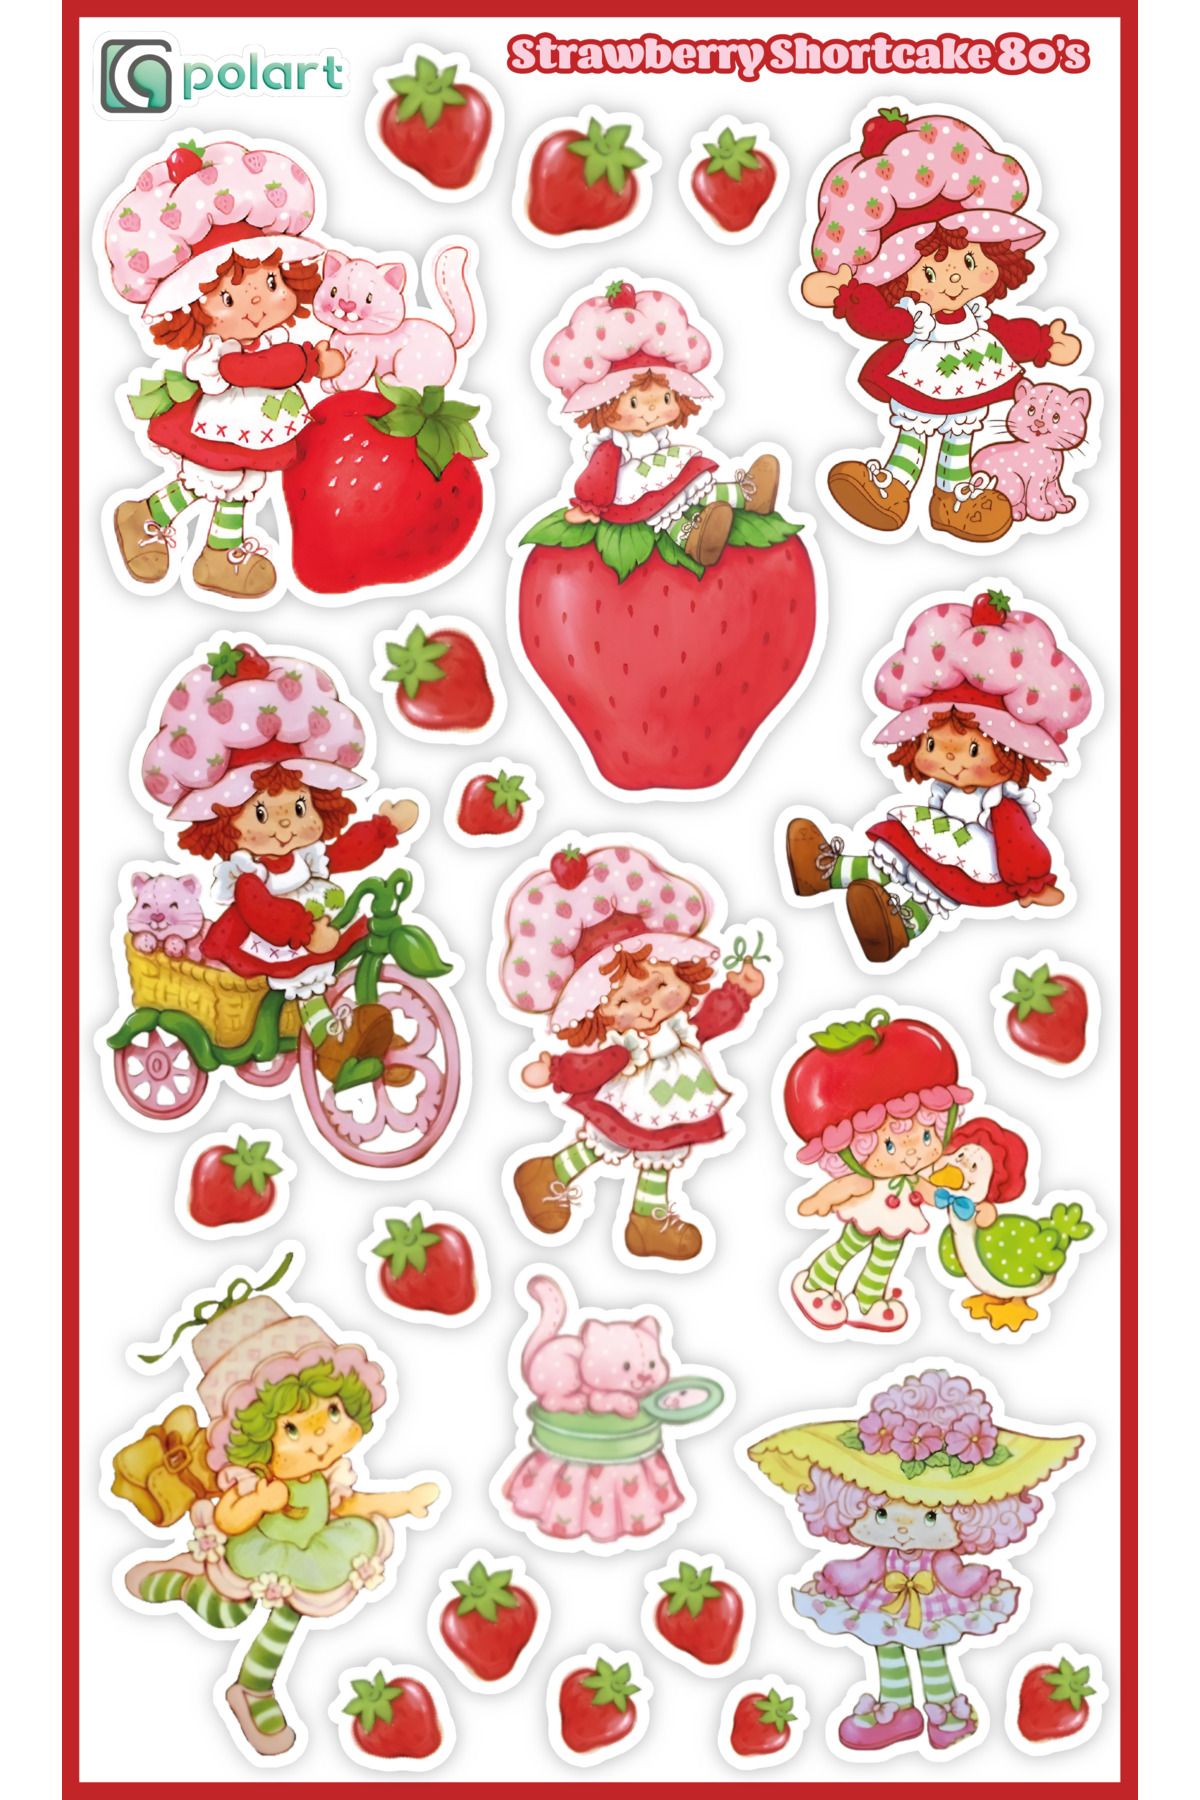 Polart Stationary Strawberry Shortcake 80's Sticker Seti - 24 adet yapışkanlı etiket Çilek kız 1980 versiyon